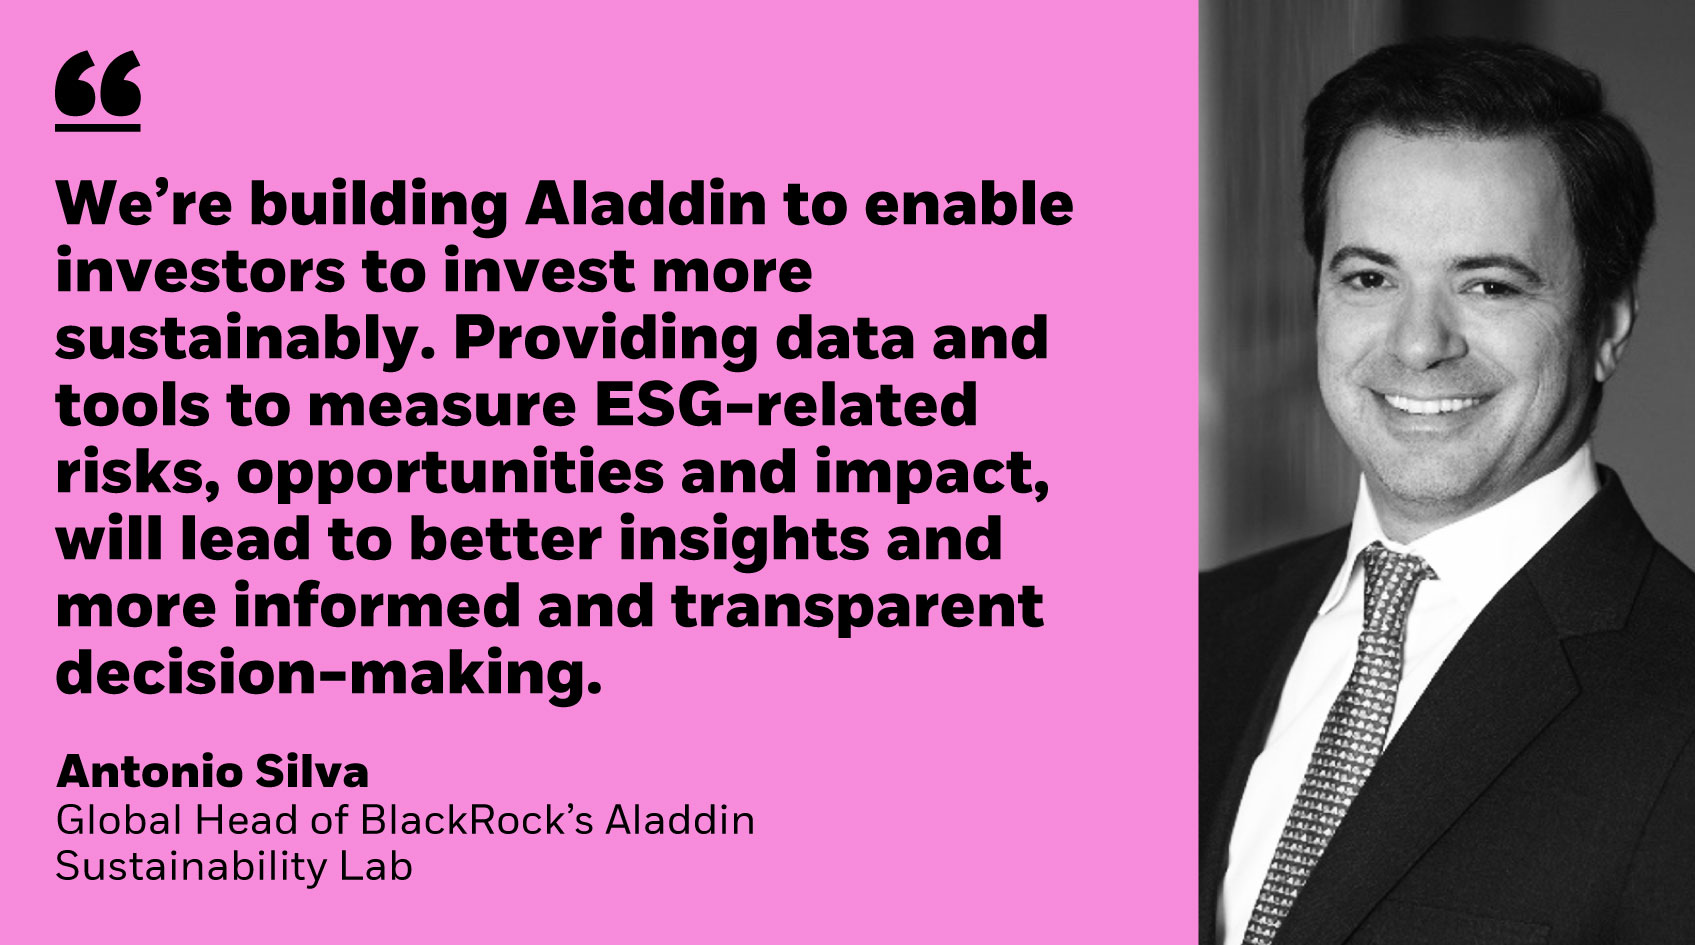 Antonio Silva, Global Head of BlackRock’s Aladdin Sustainability Lab